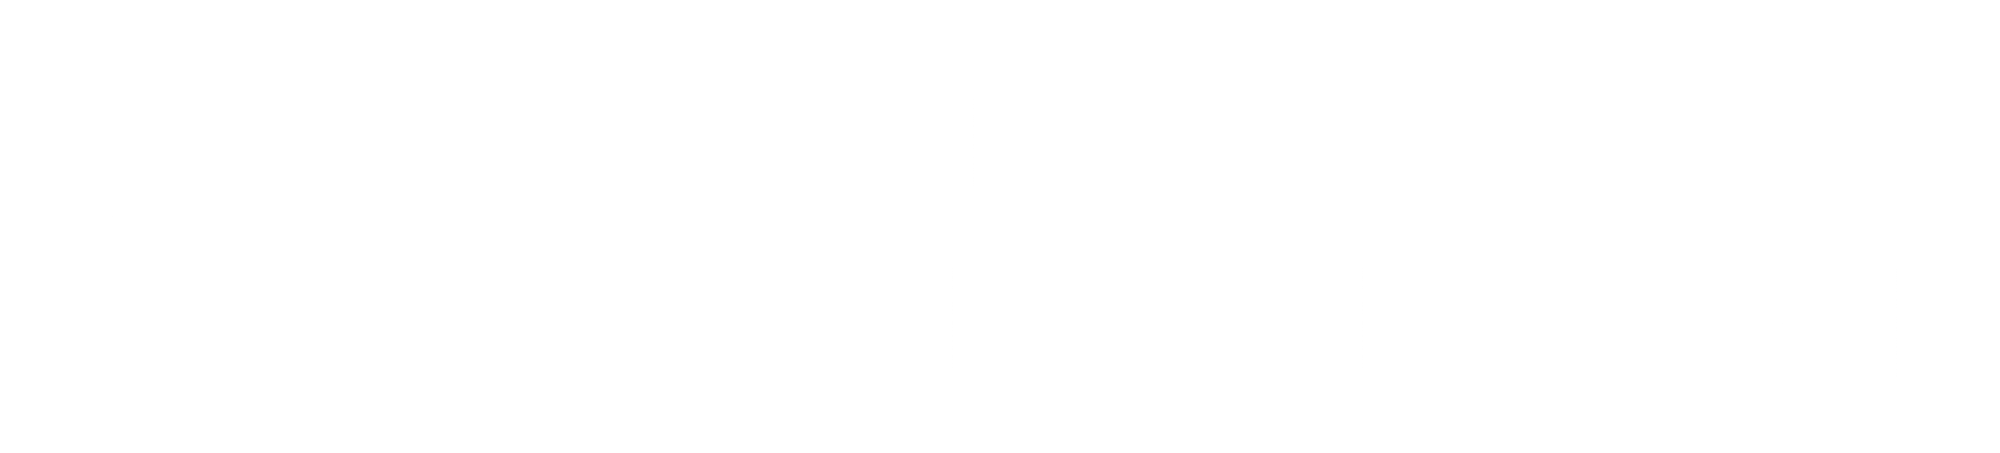 Pediatric Cancer Data Commons